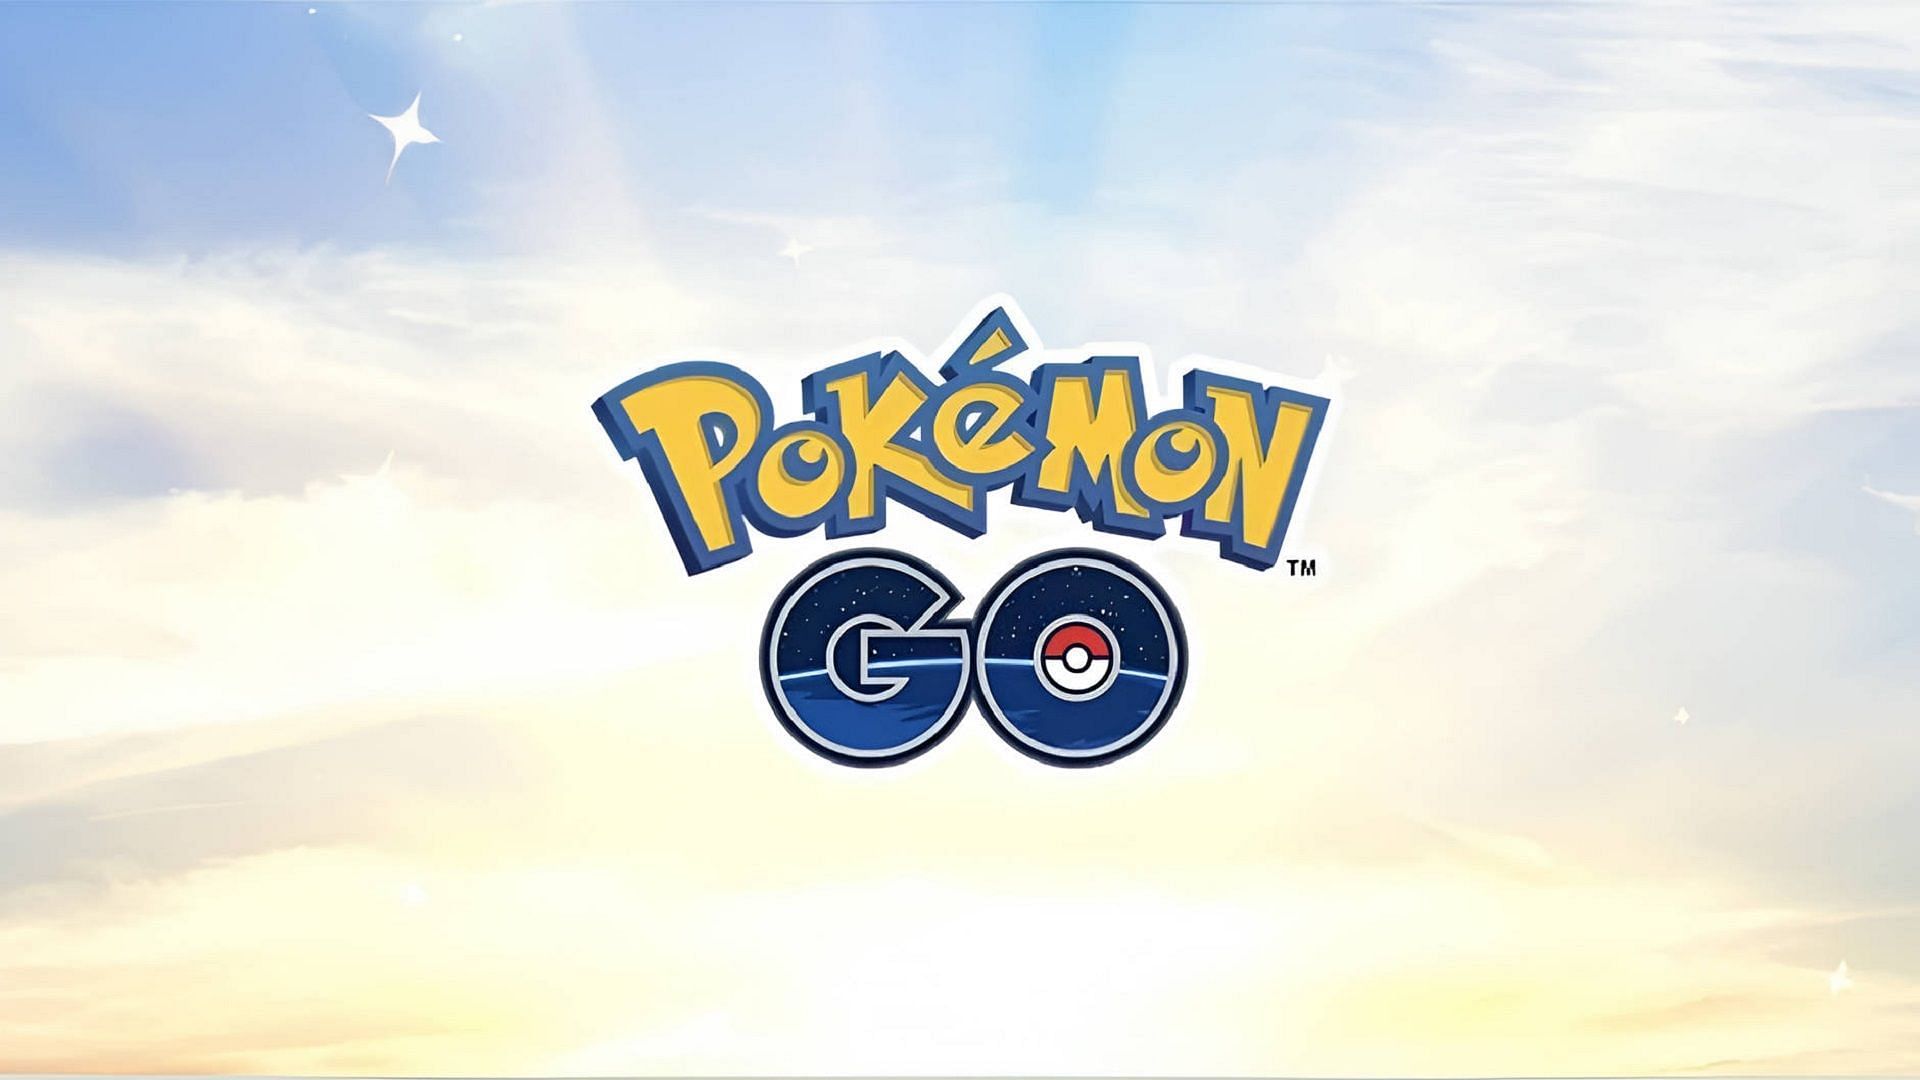 Pokémon Go Revenue and Usage Statistics (2023) - Business of Apps